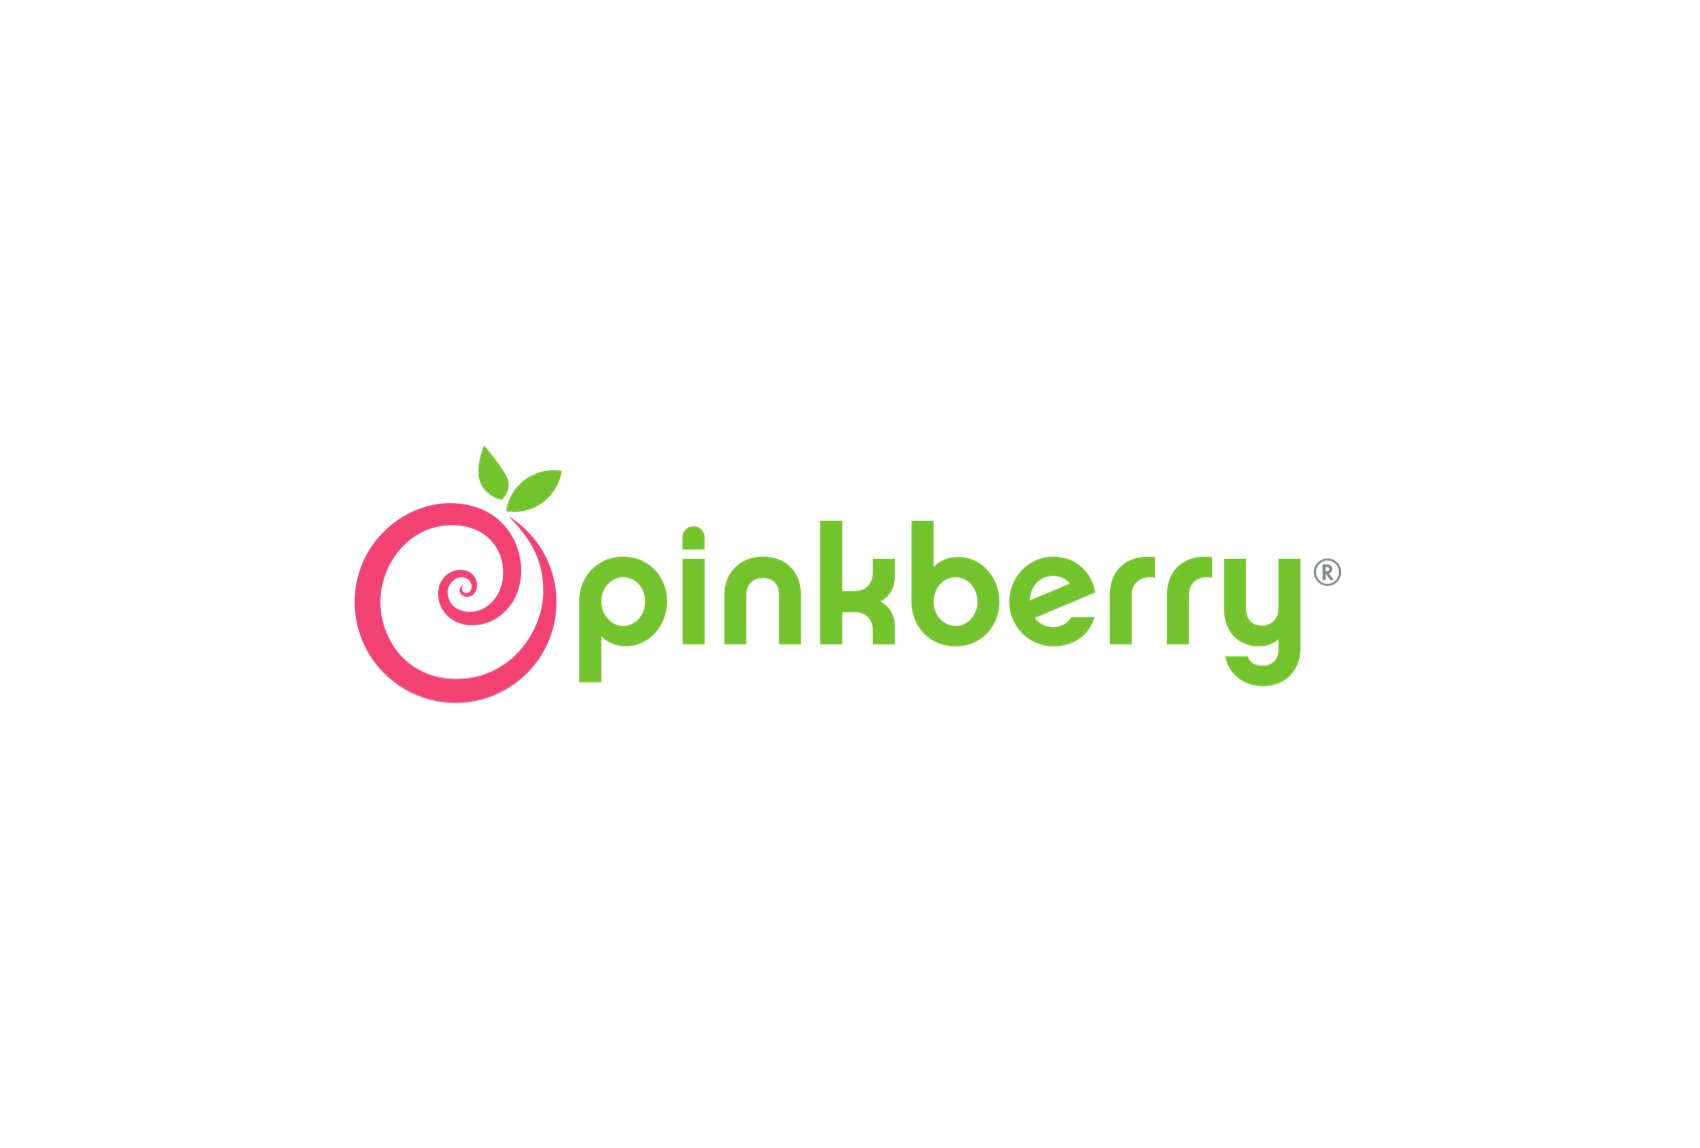 pink-logo-pinkberry